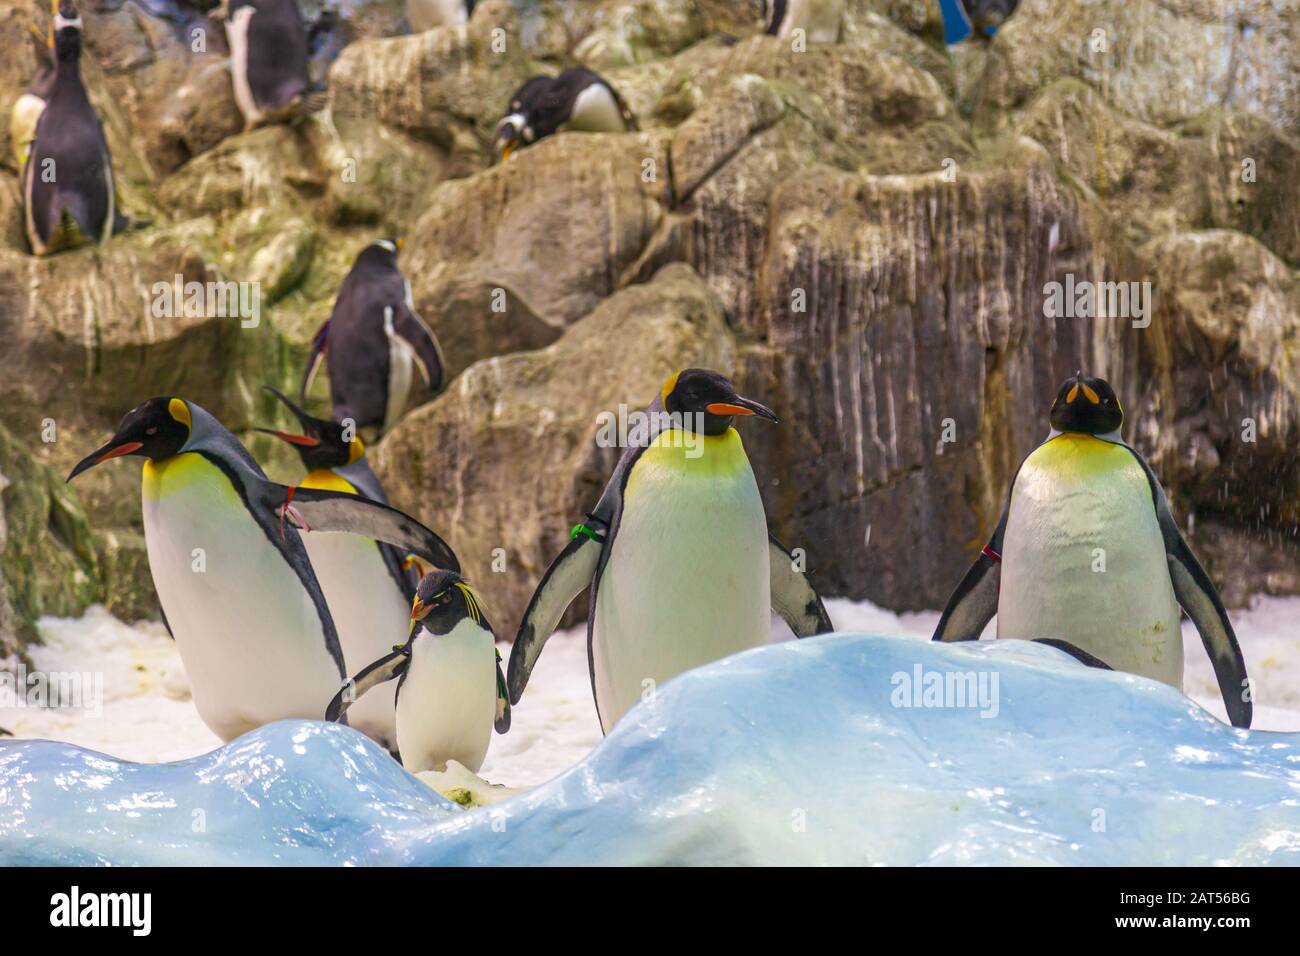 Penguin pianeta neve reale, un iceberg enorme e centinaia di pinguini a loro parco tenerife Foto Stock